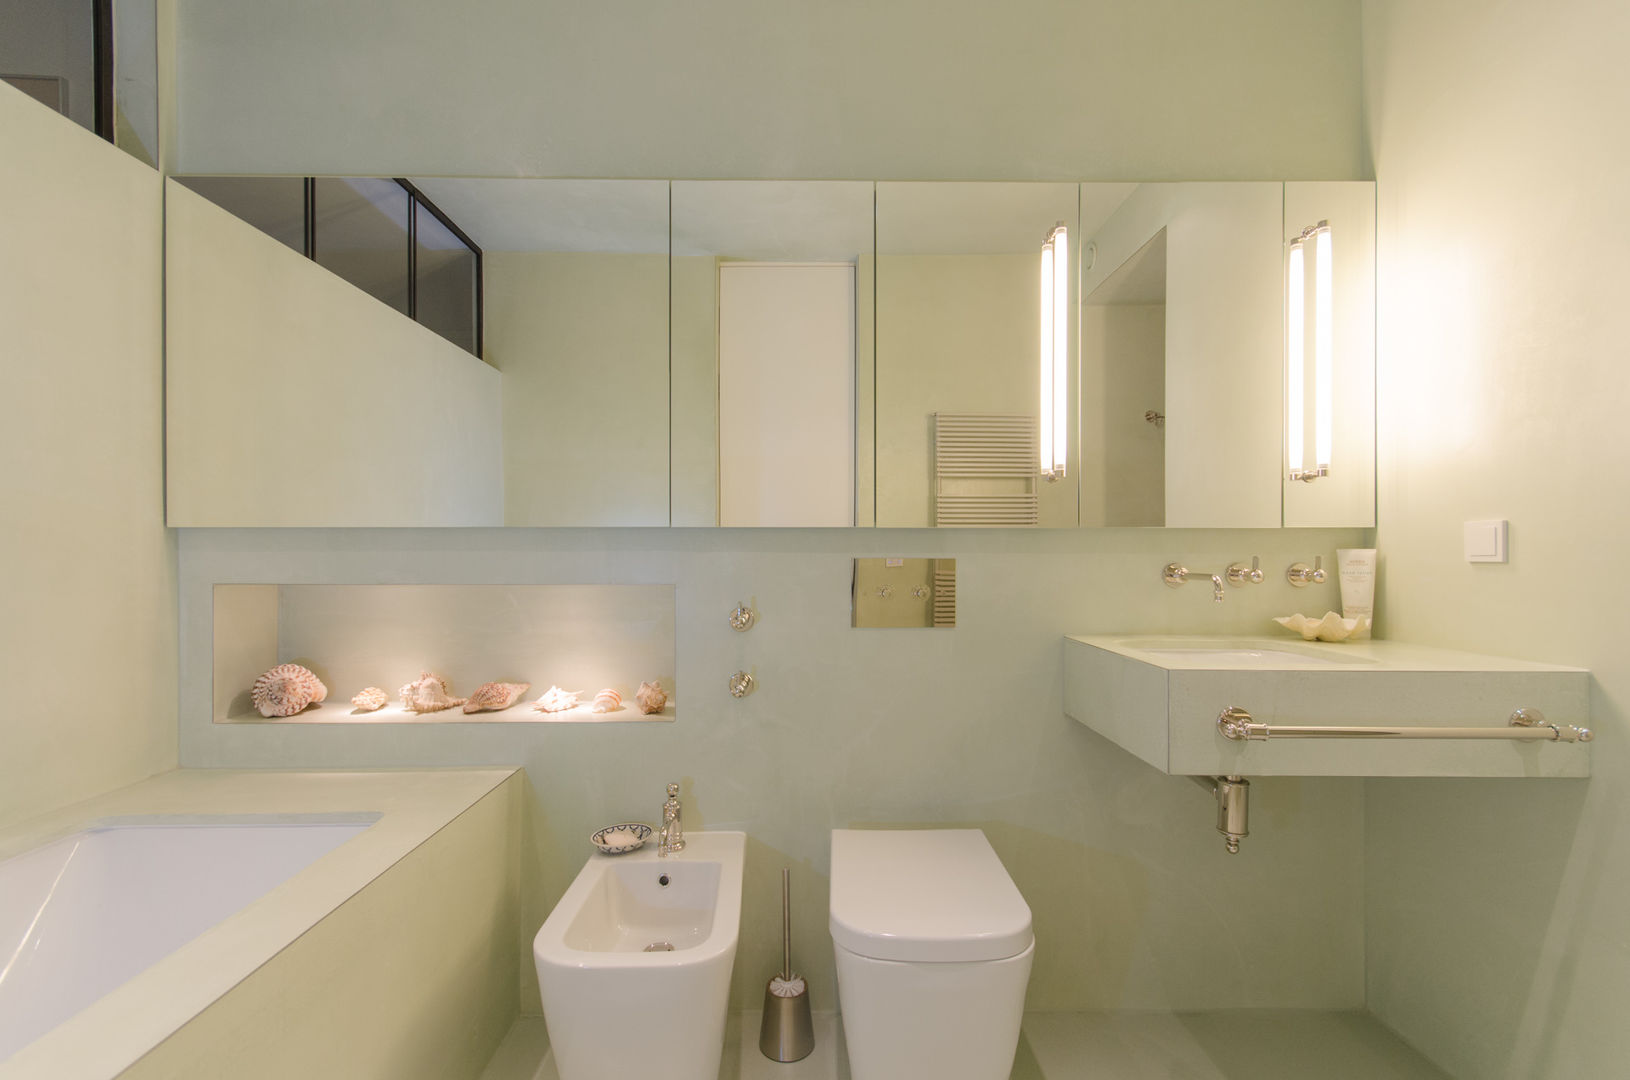 Fresh Mint Aura Vivante Ванная комната в стиле модерн bathroom,design,modern,lights,renovation,remodeling,badezimmer